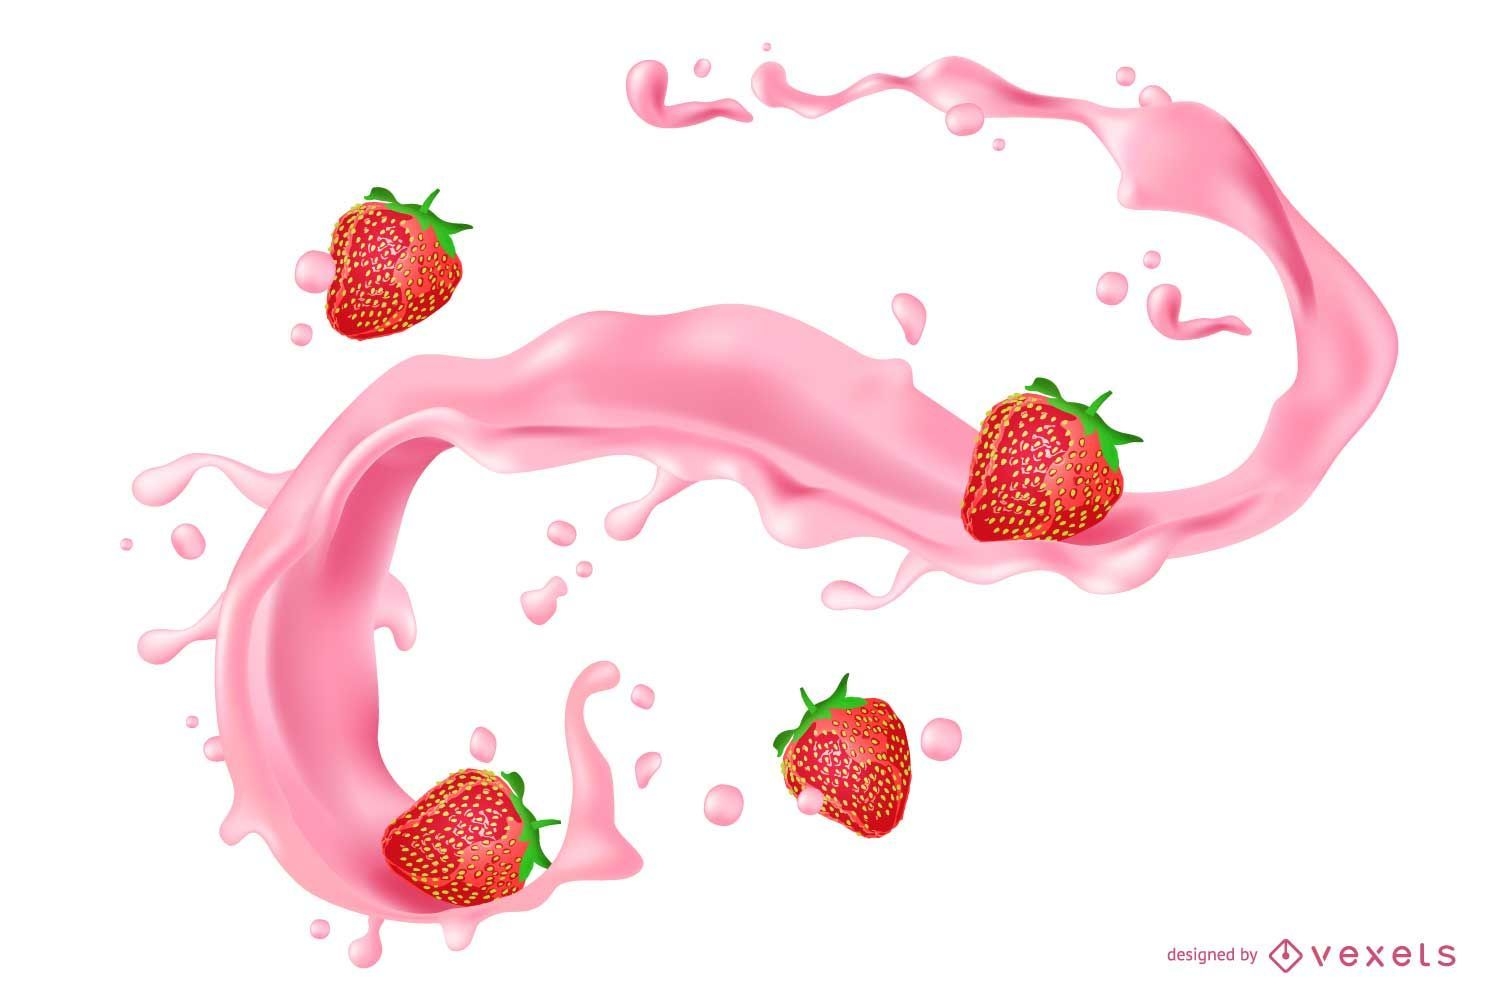 Erdbeersaft-Spritzer-Illustration